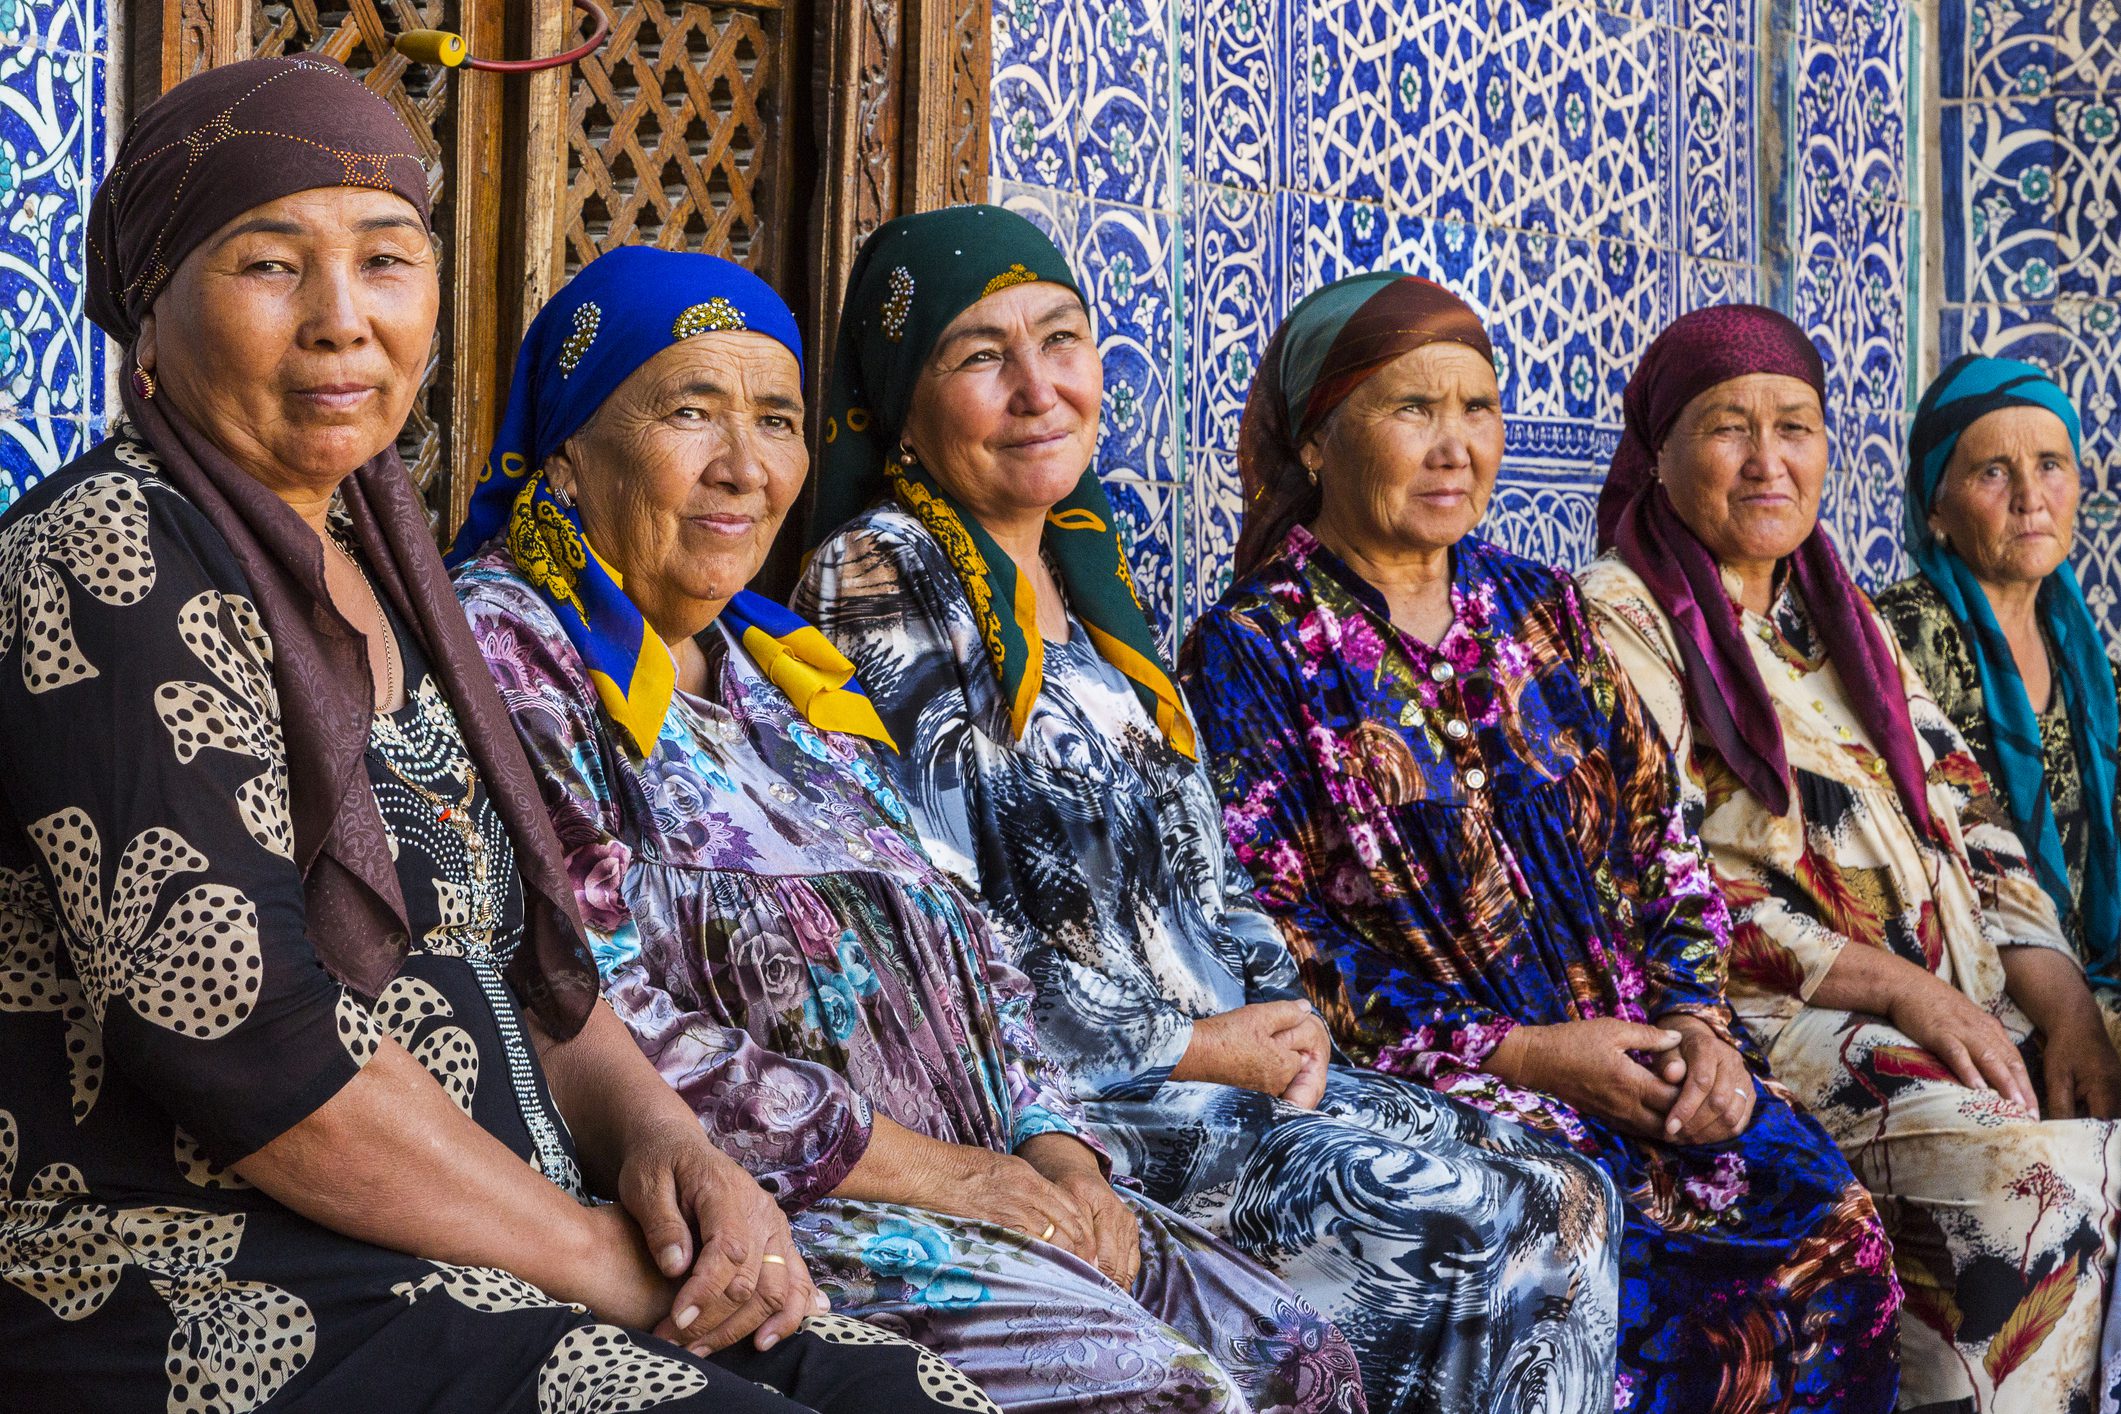 Uzbek women in colorful dresses.